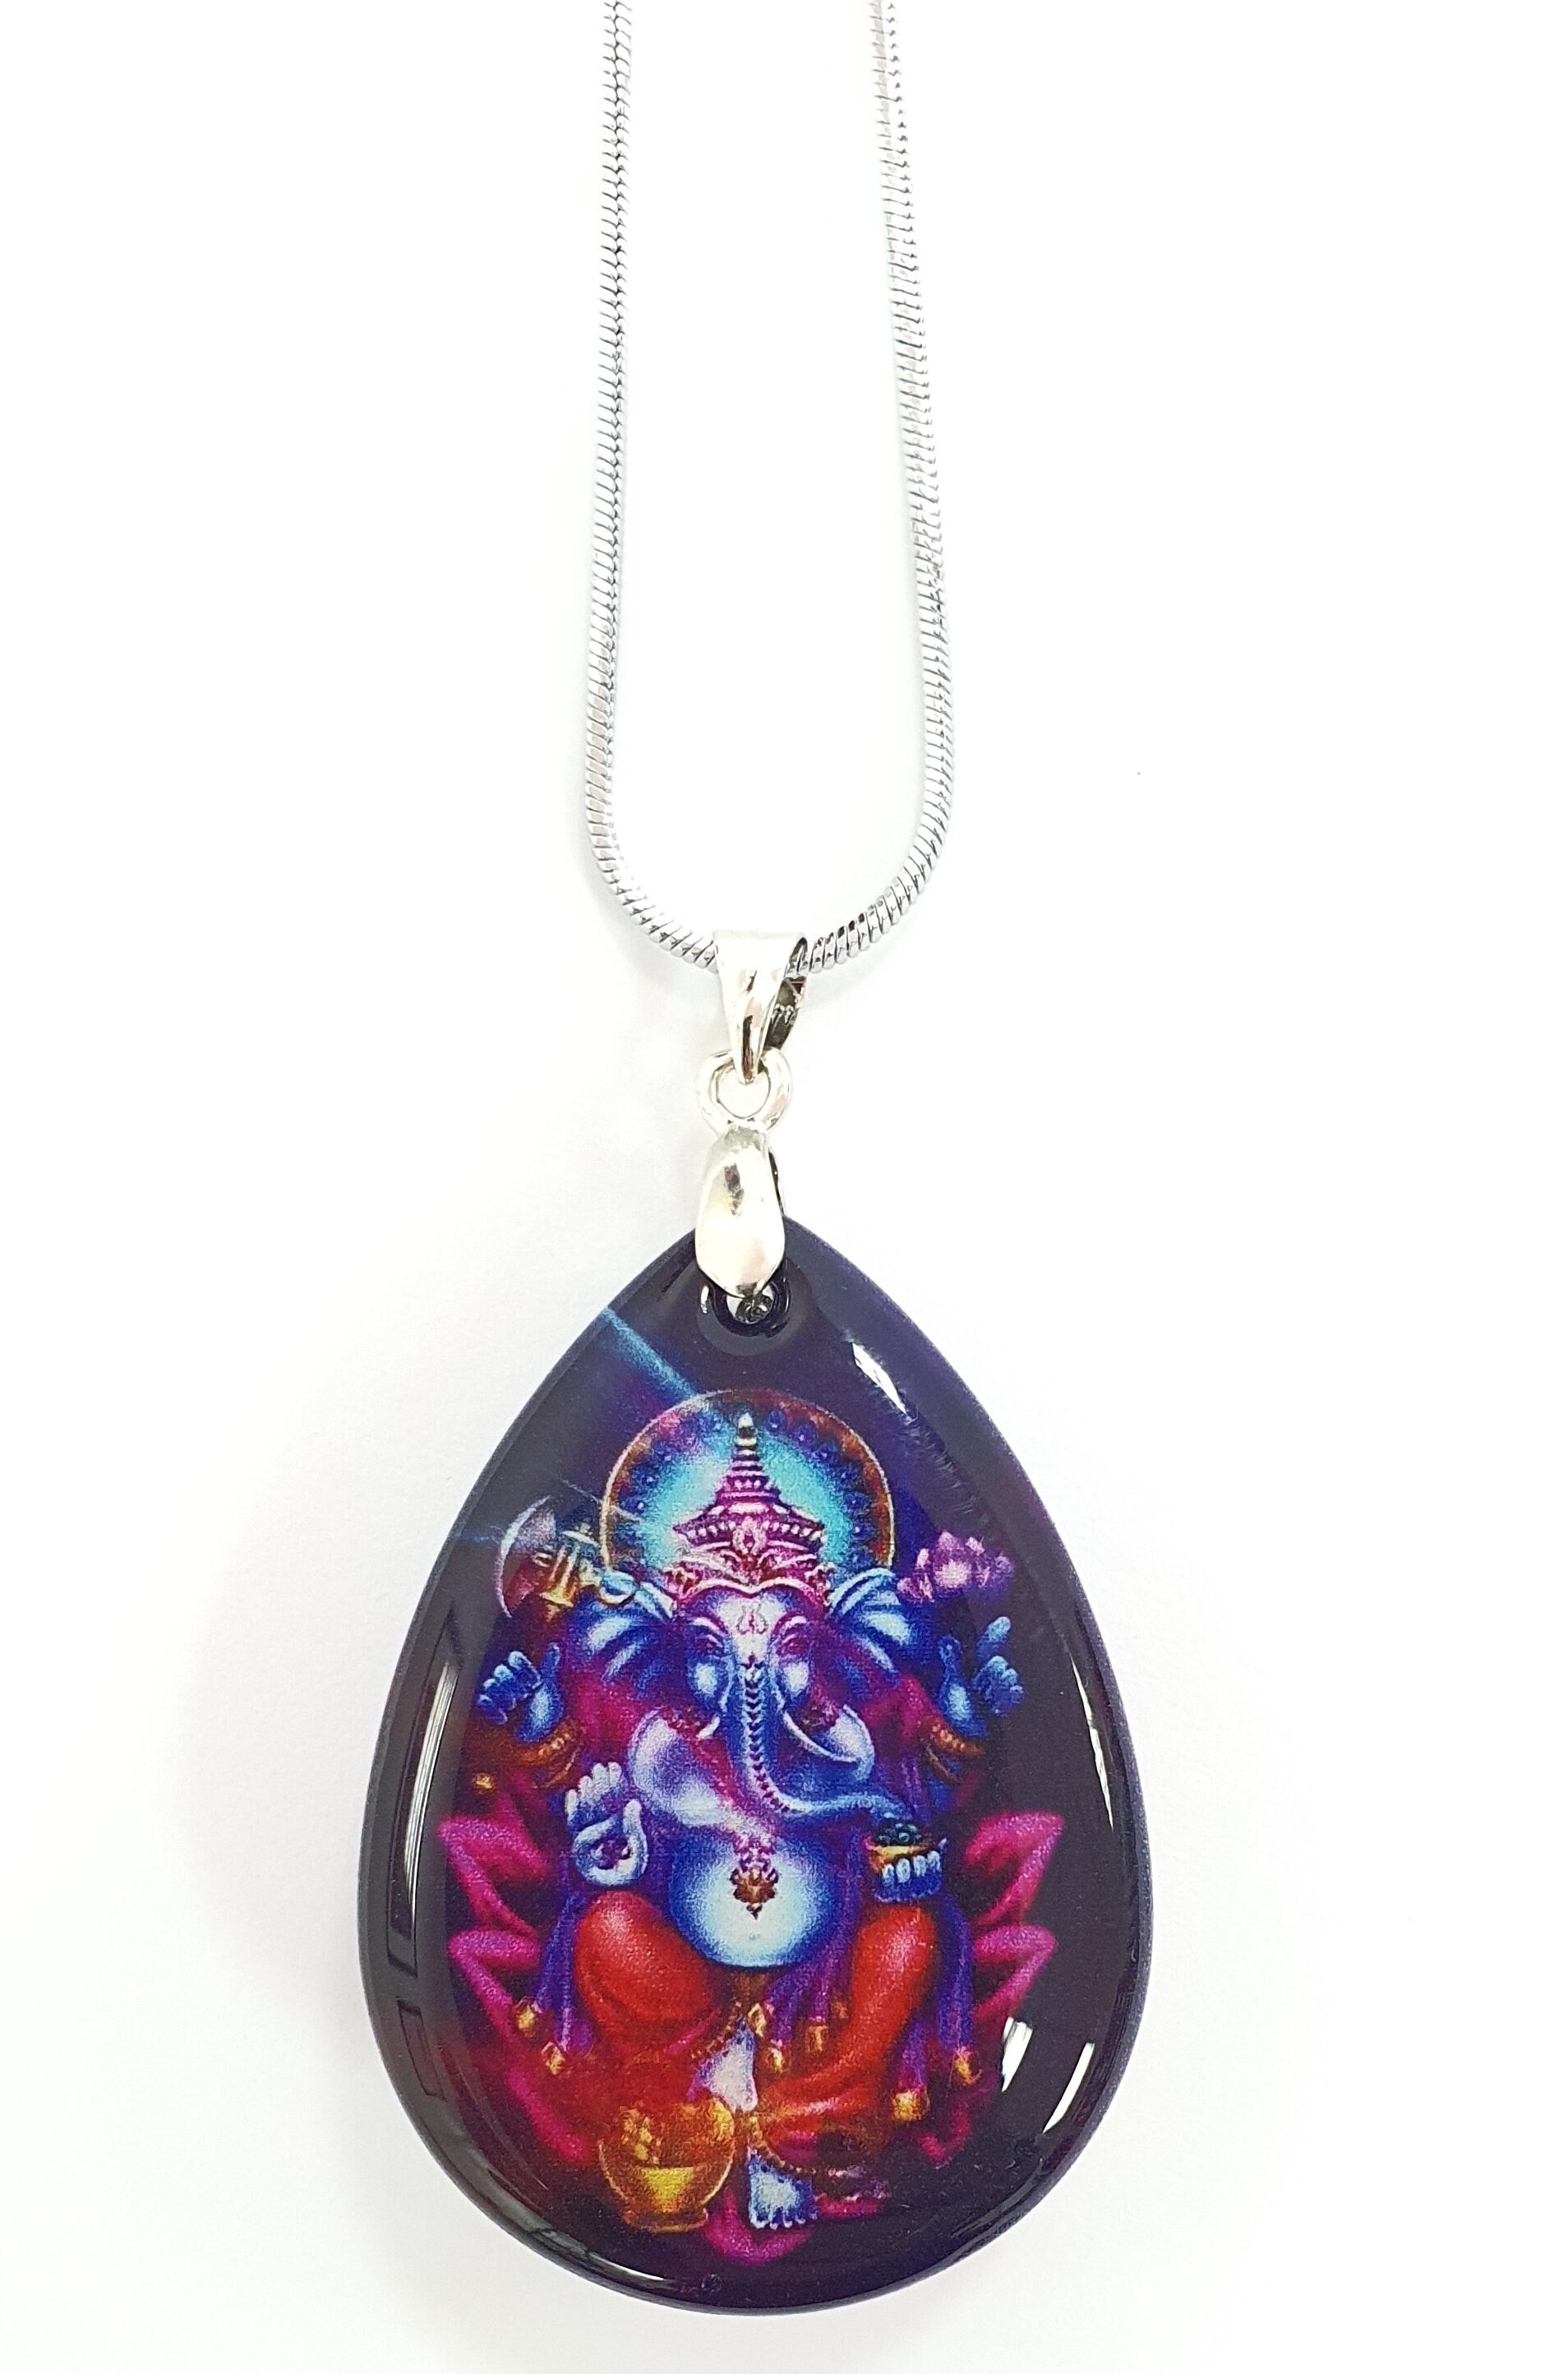 Lord Ganesha necklace